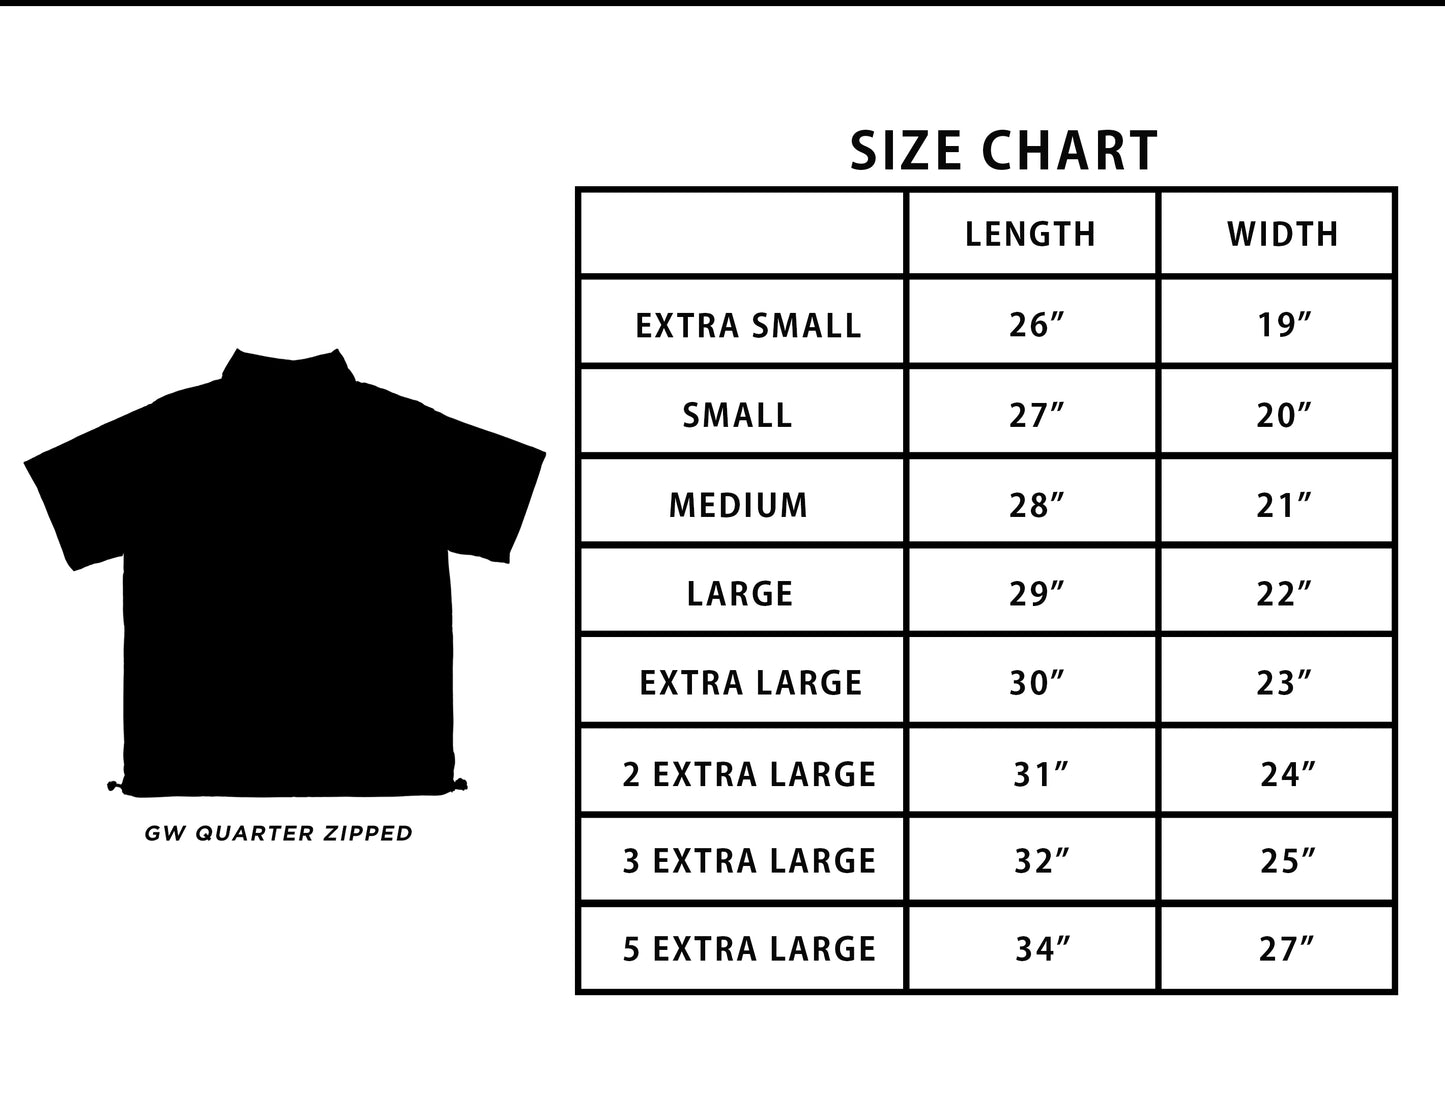 GW Quarter ziped Trail Shirt (Black)